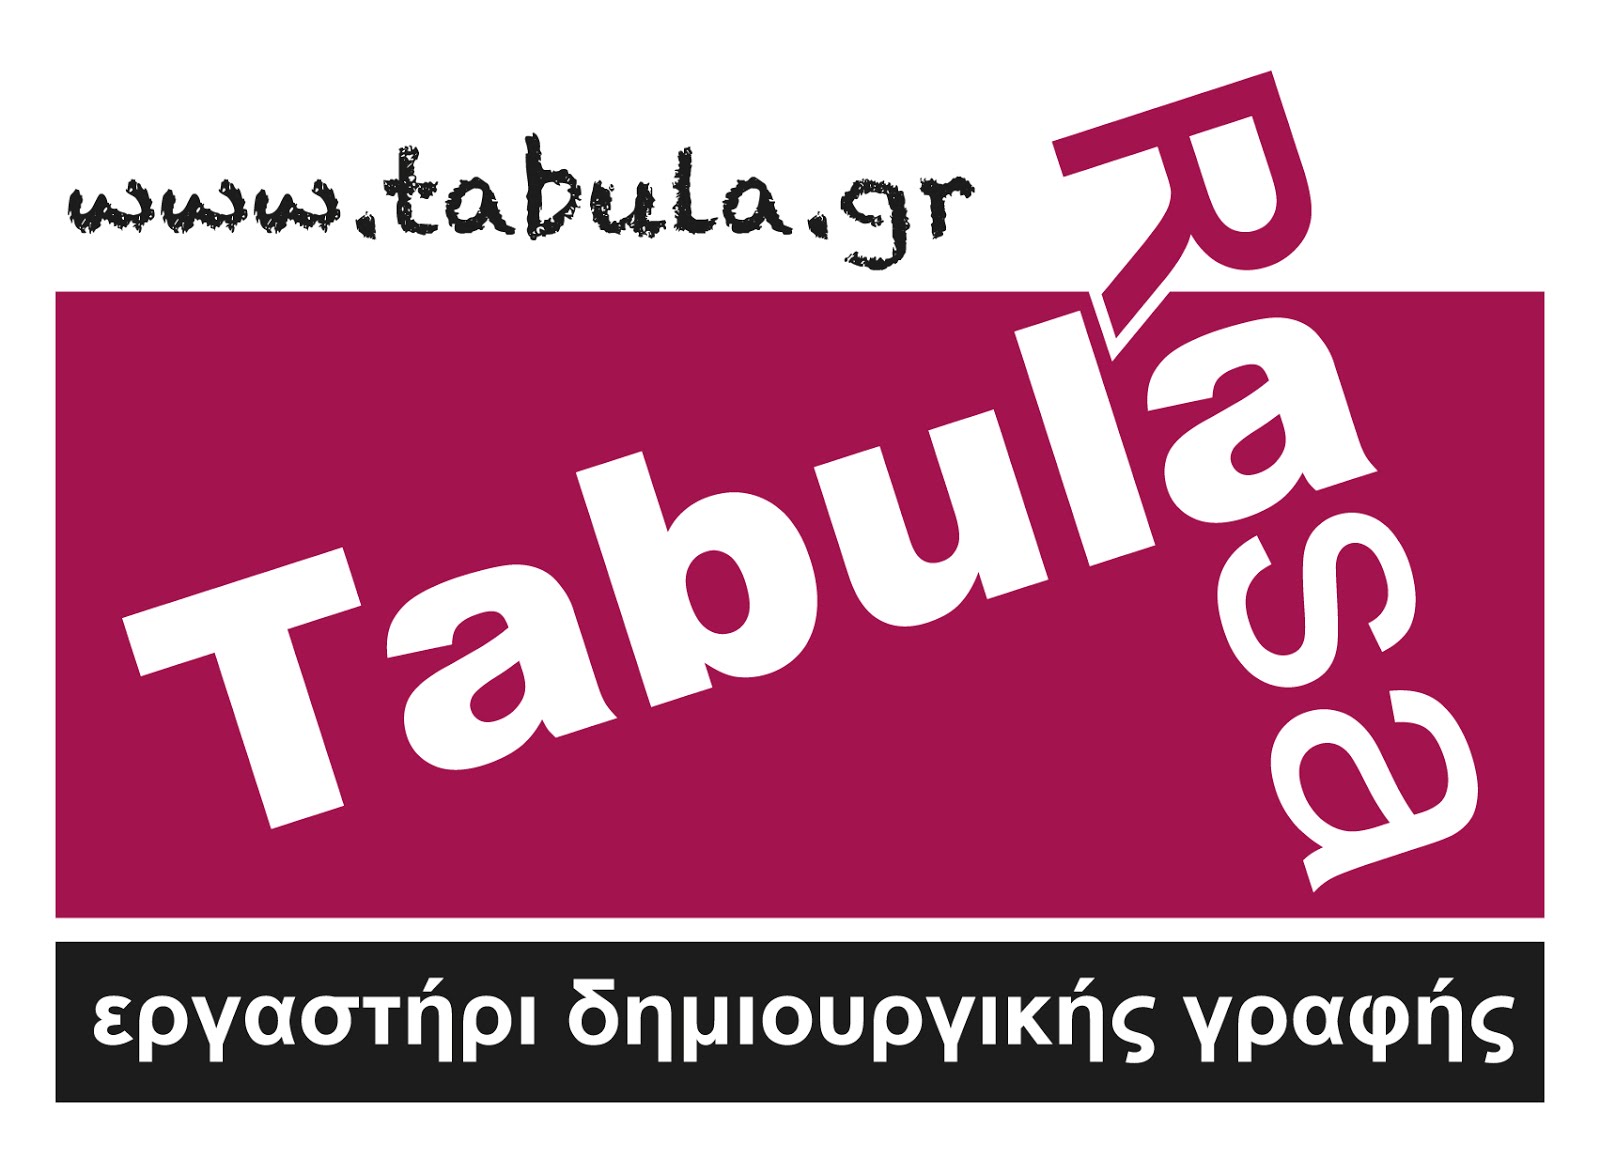 Tabula Rasa Blog: Εβδομάδα δωρεάν σεμιναρίων "Tabula Rasa"